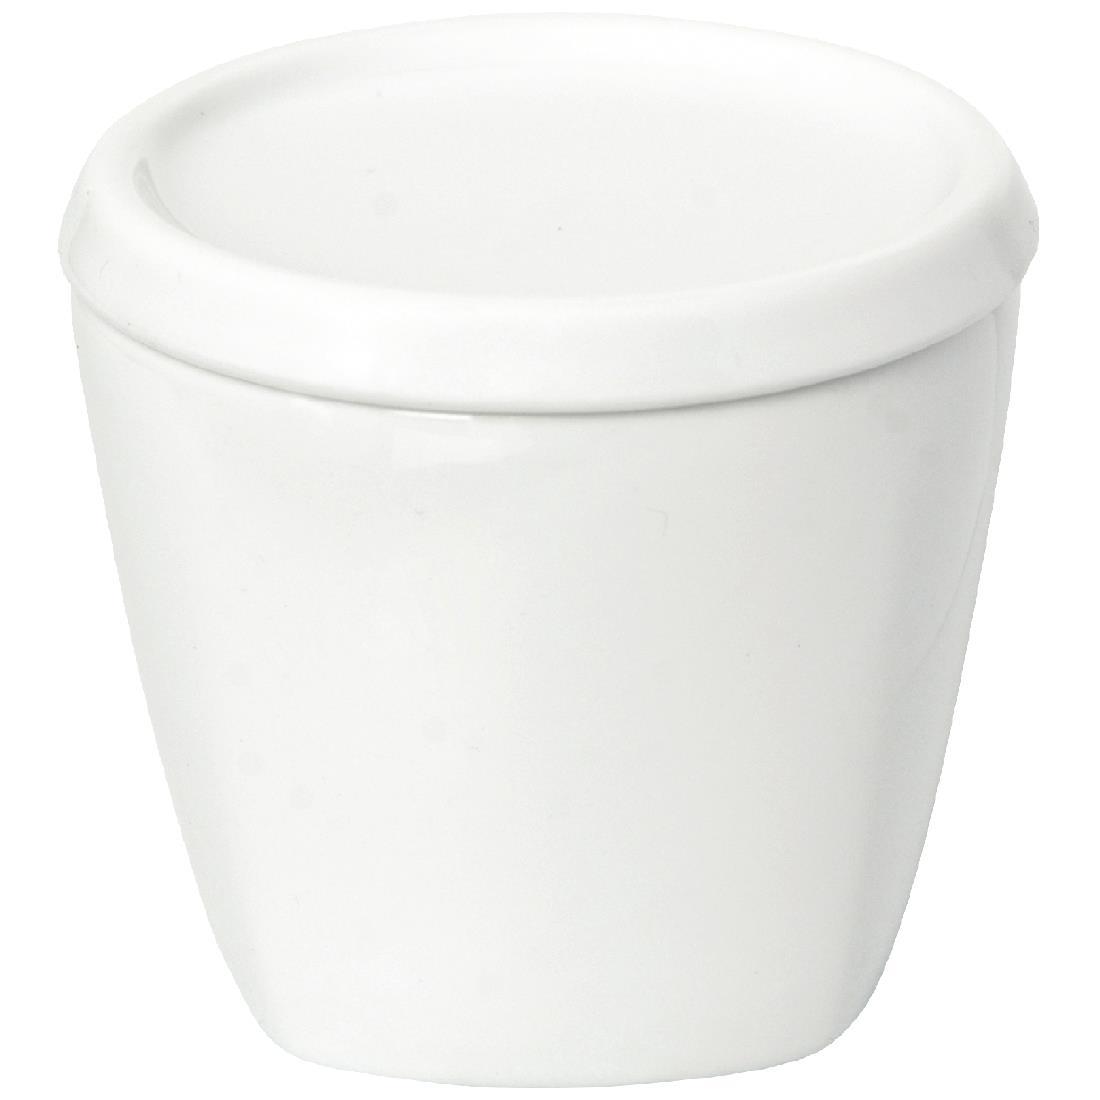 Royal Porcelain Kana Sugar Bowls with Lids (Pack of 12) - CG110  - 2